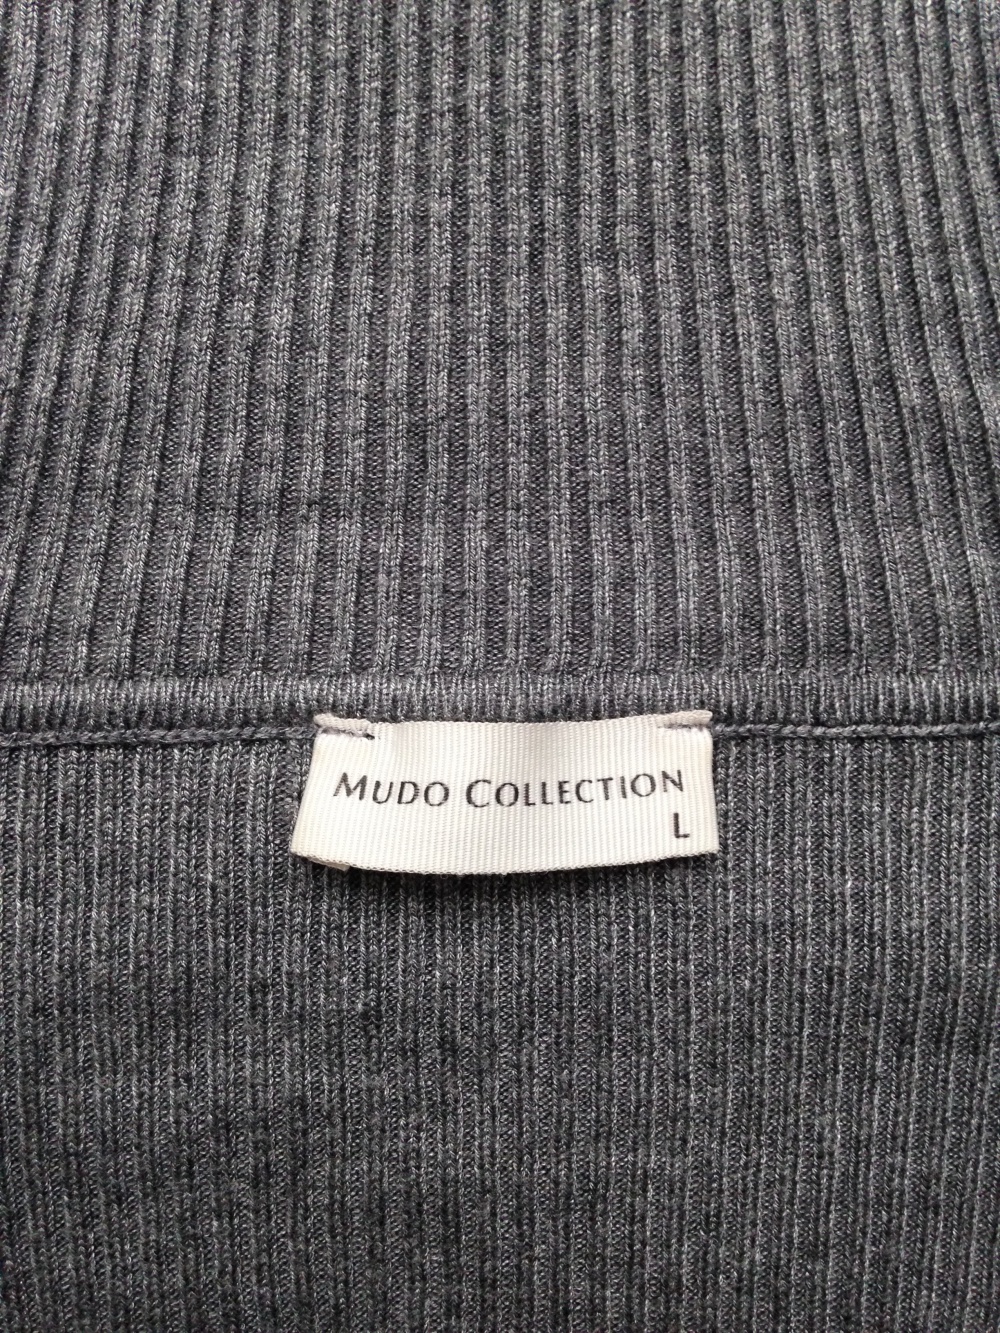 Водолазка " Mudo Collection ", размер L